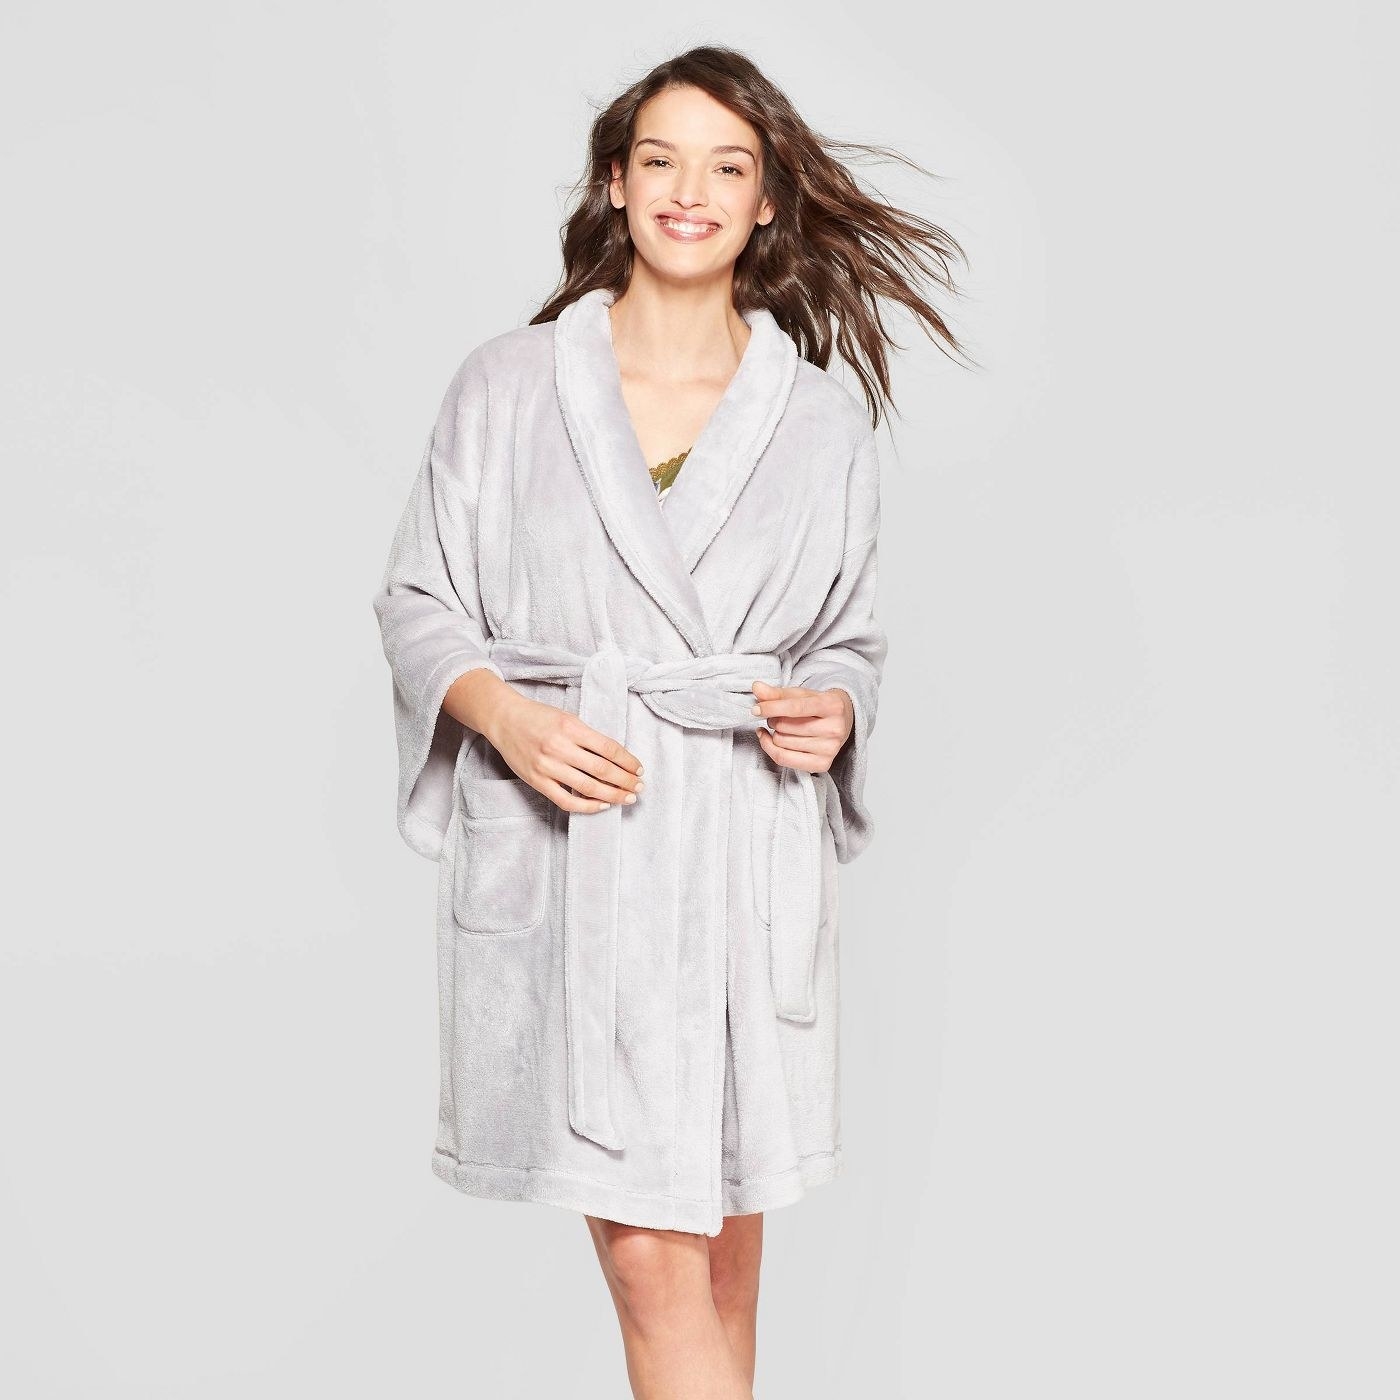 A grey robe